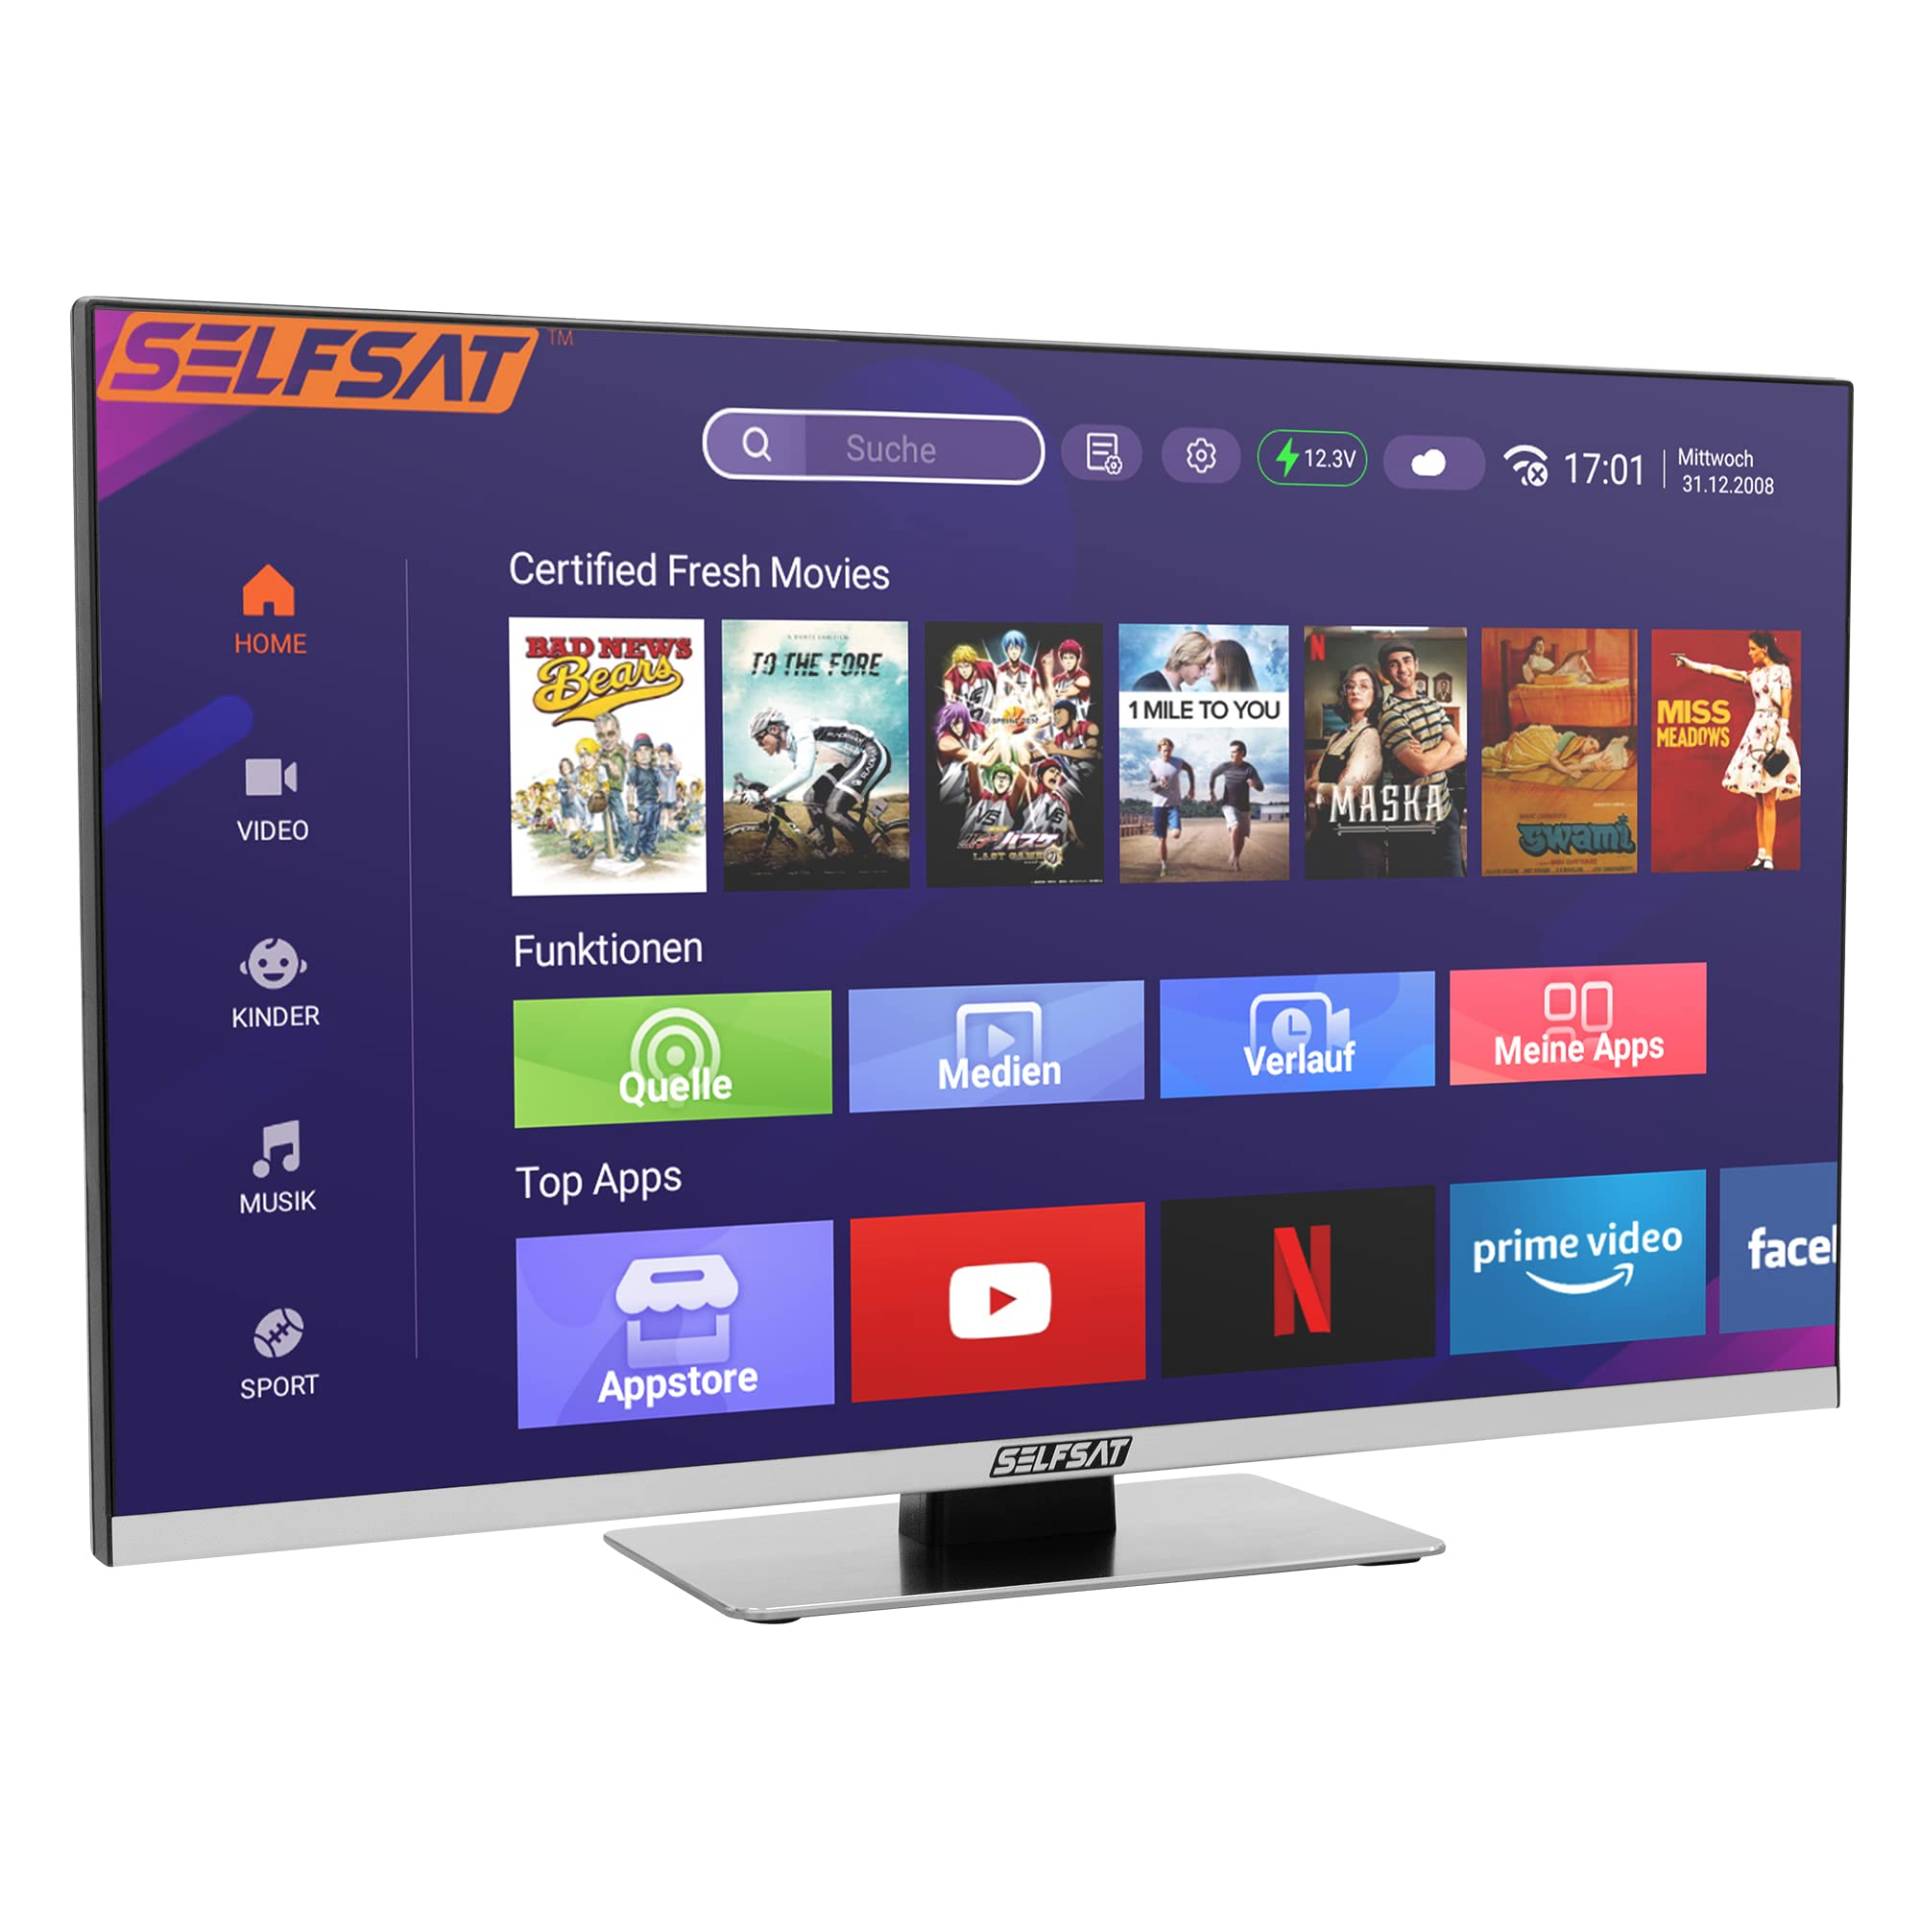 SELFSAT SMART LED TV 1260 (60cm/24) rahmenloser TV inkl. DVB-S2/C/T2 HD Tuner mit WLAN u. Bluetooth von SELFSAT